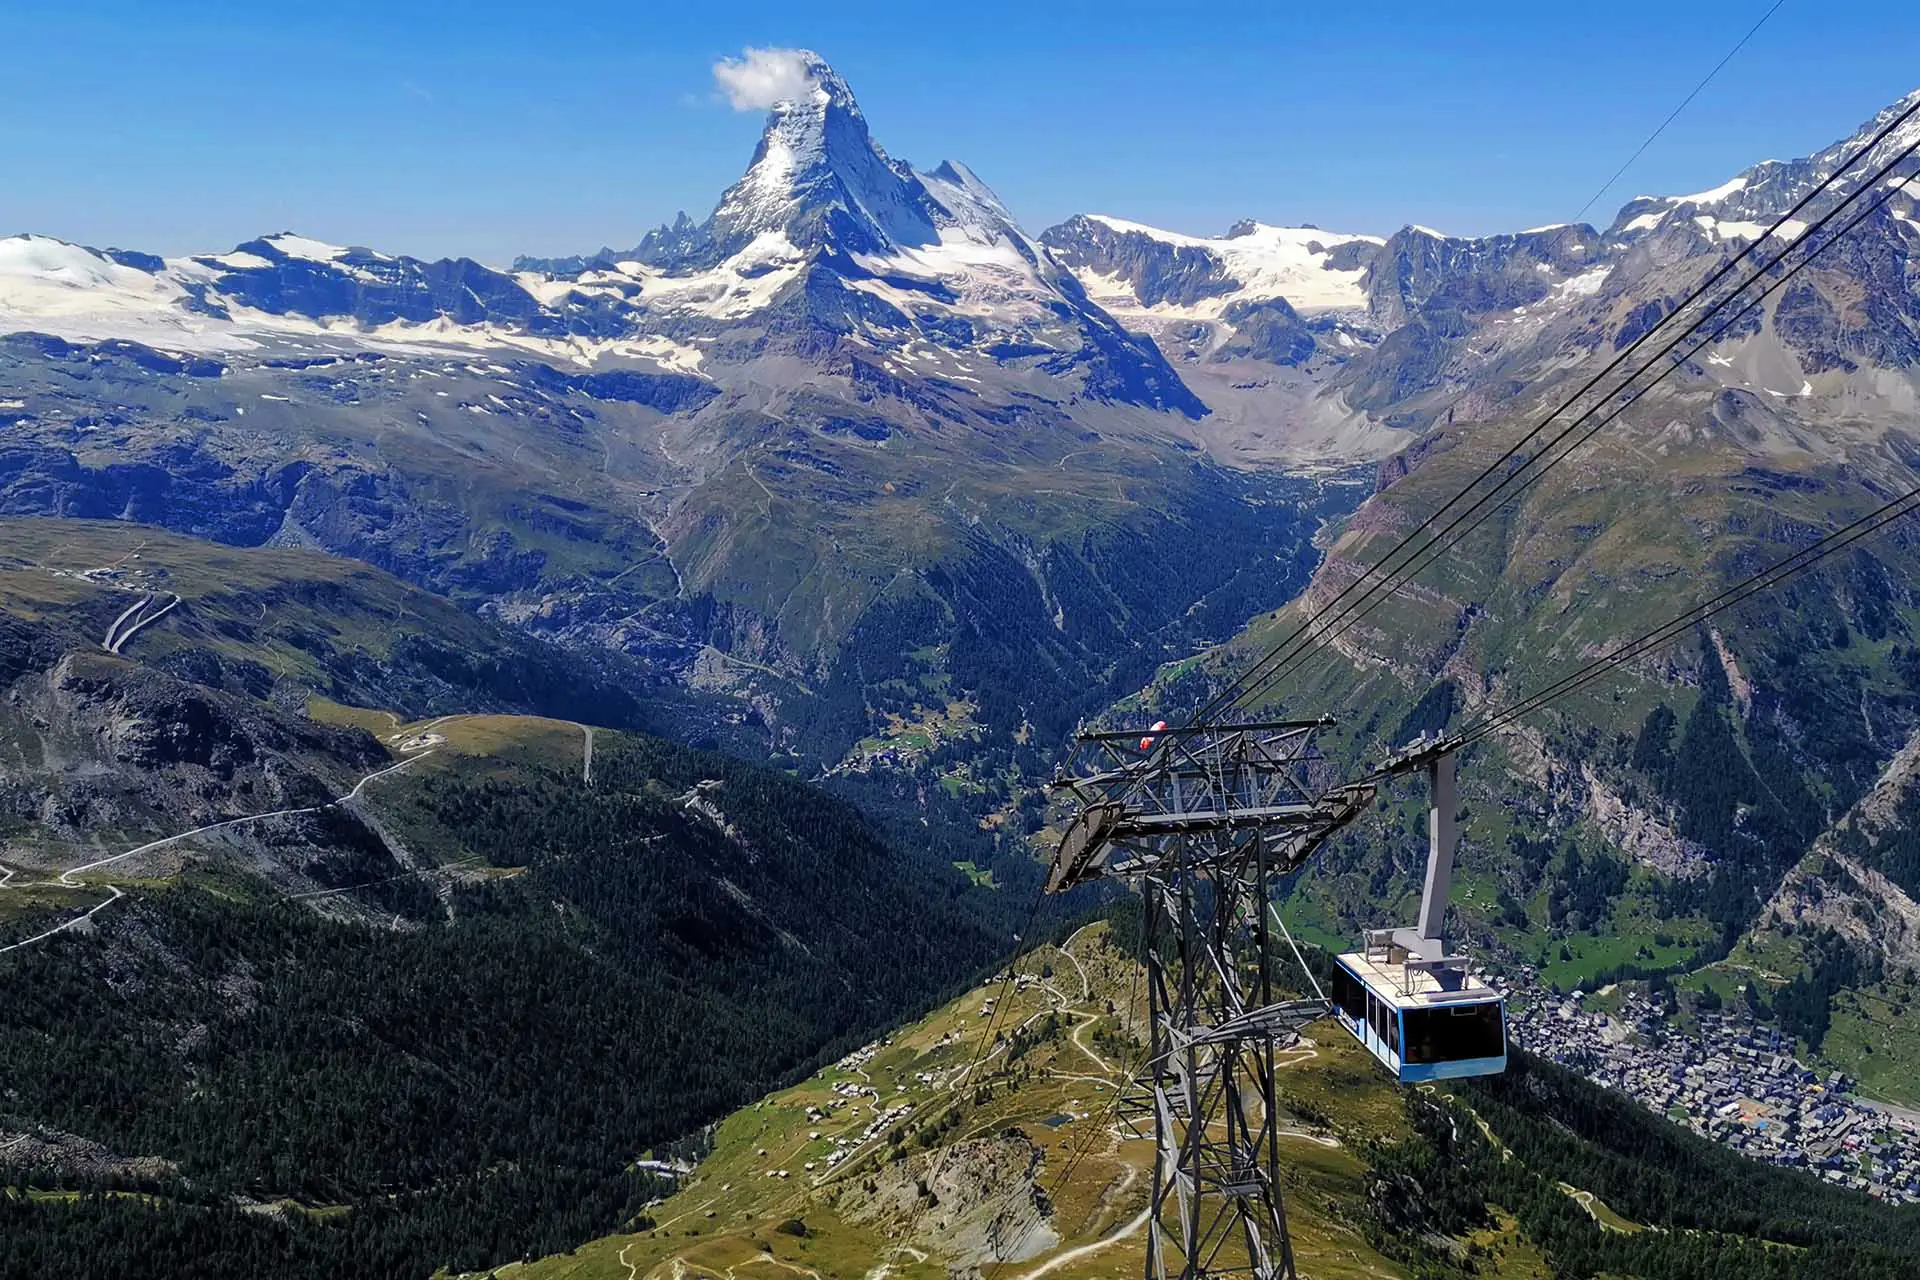 Zermatt with the famous Matterhorn is a must-see place in Switzerland.